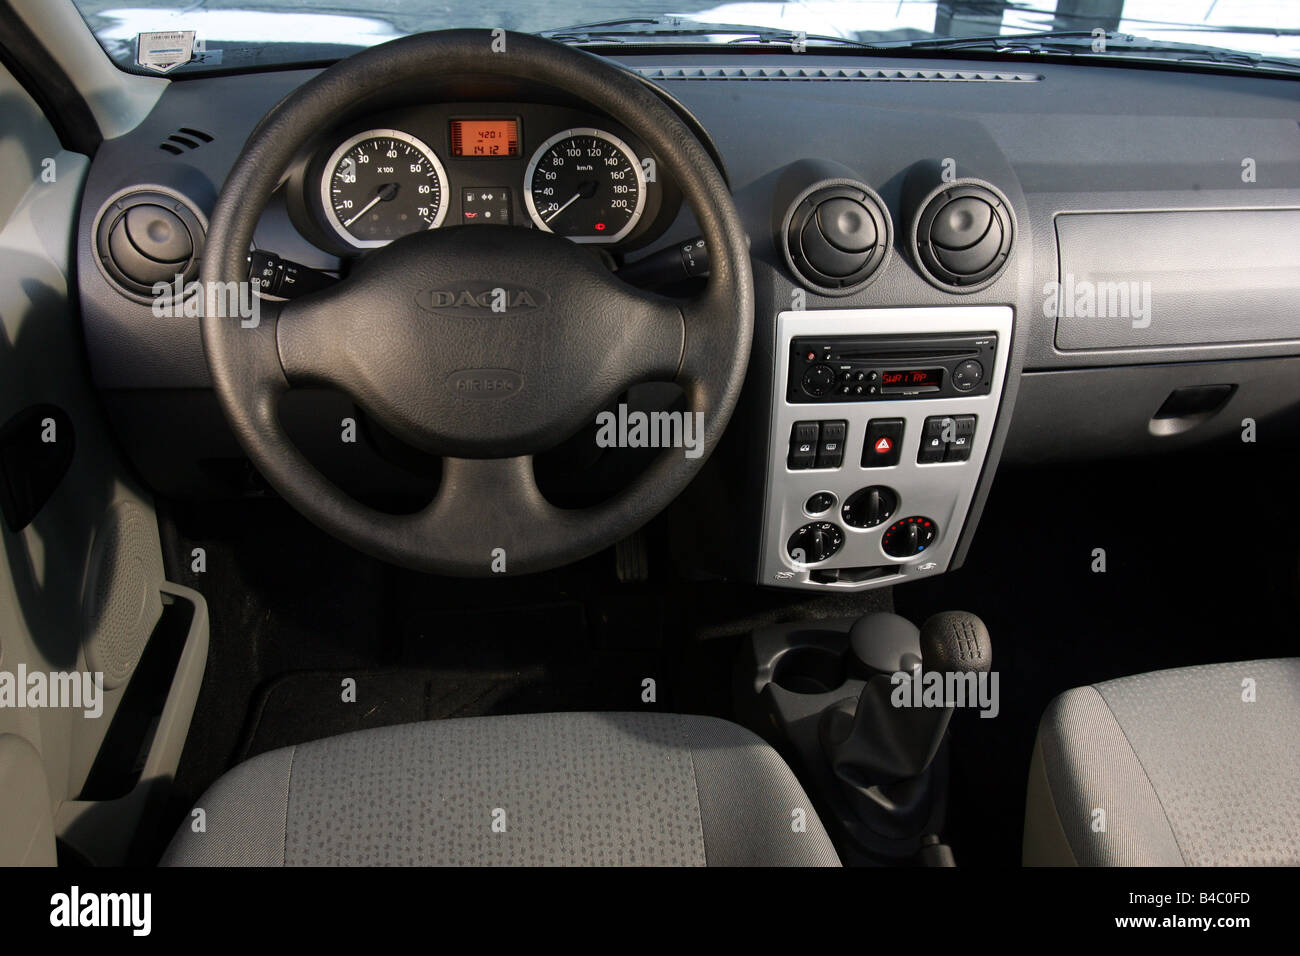 Interior logan car hi-res stock photography and images - Alamy